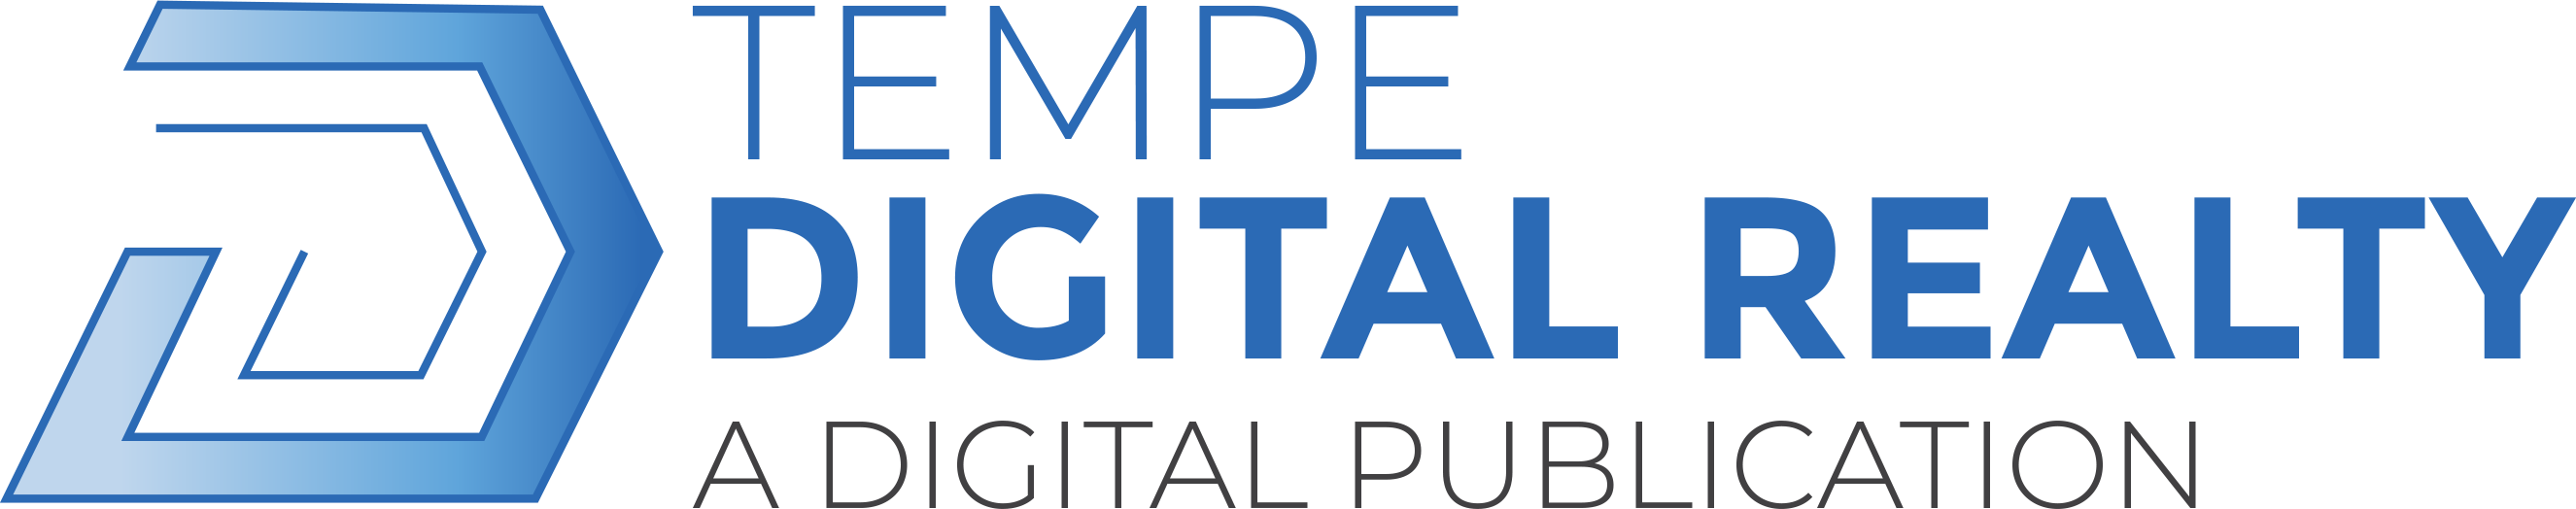 Tempe Digital Realty Logo